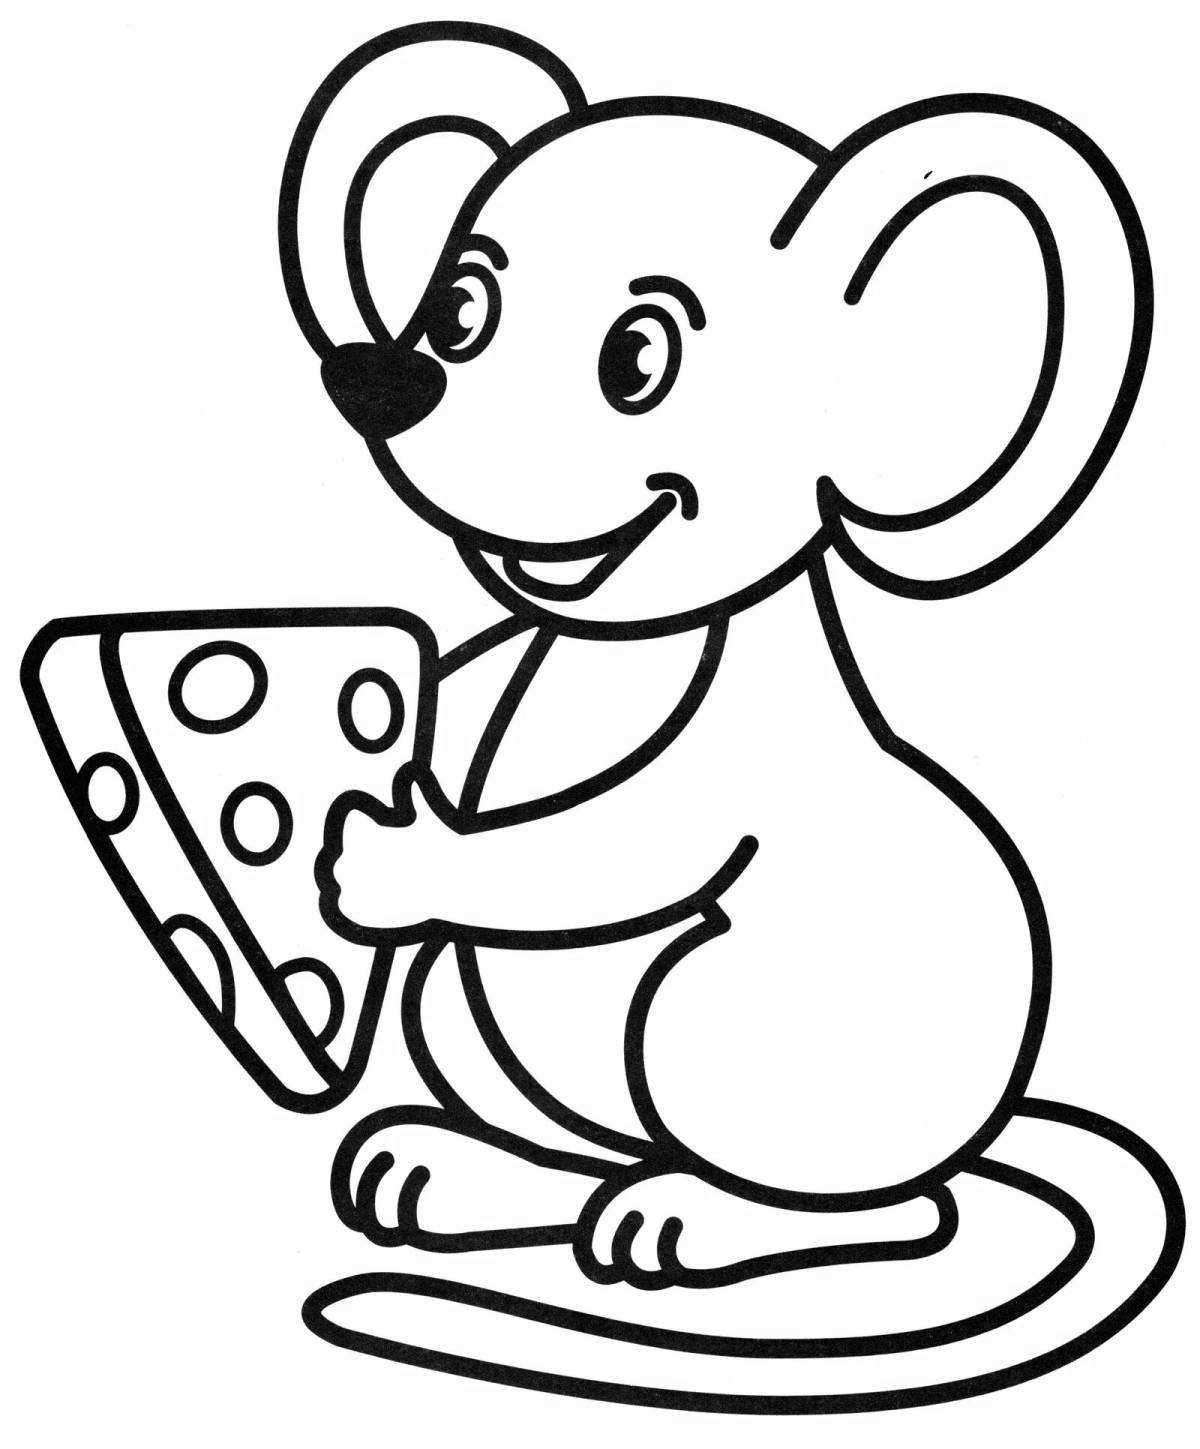 Charming mouse norushka coloring book